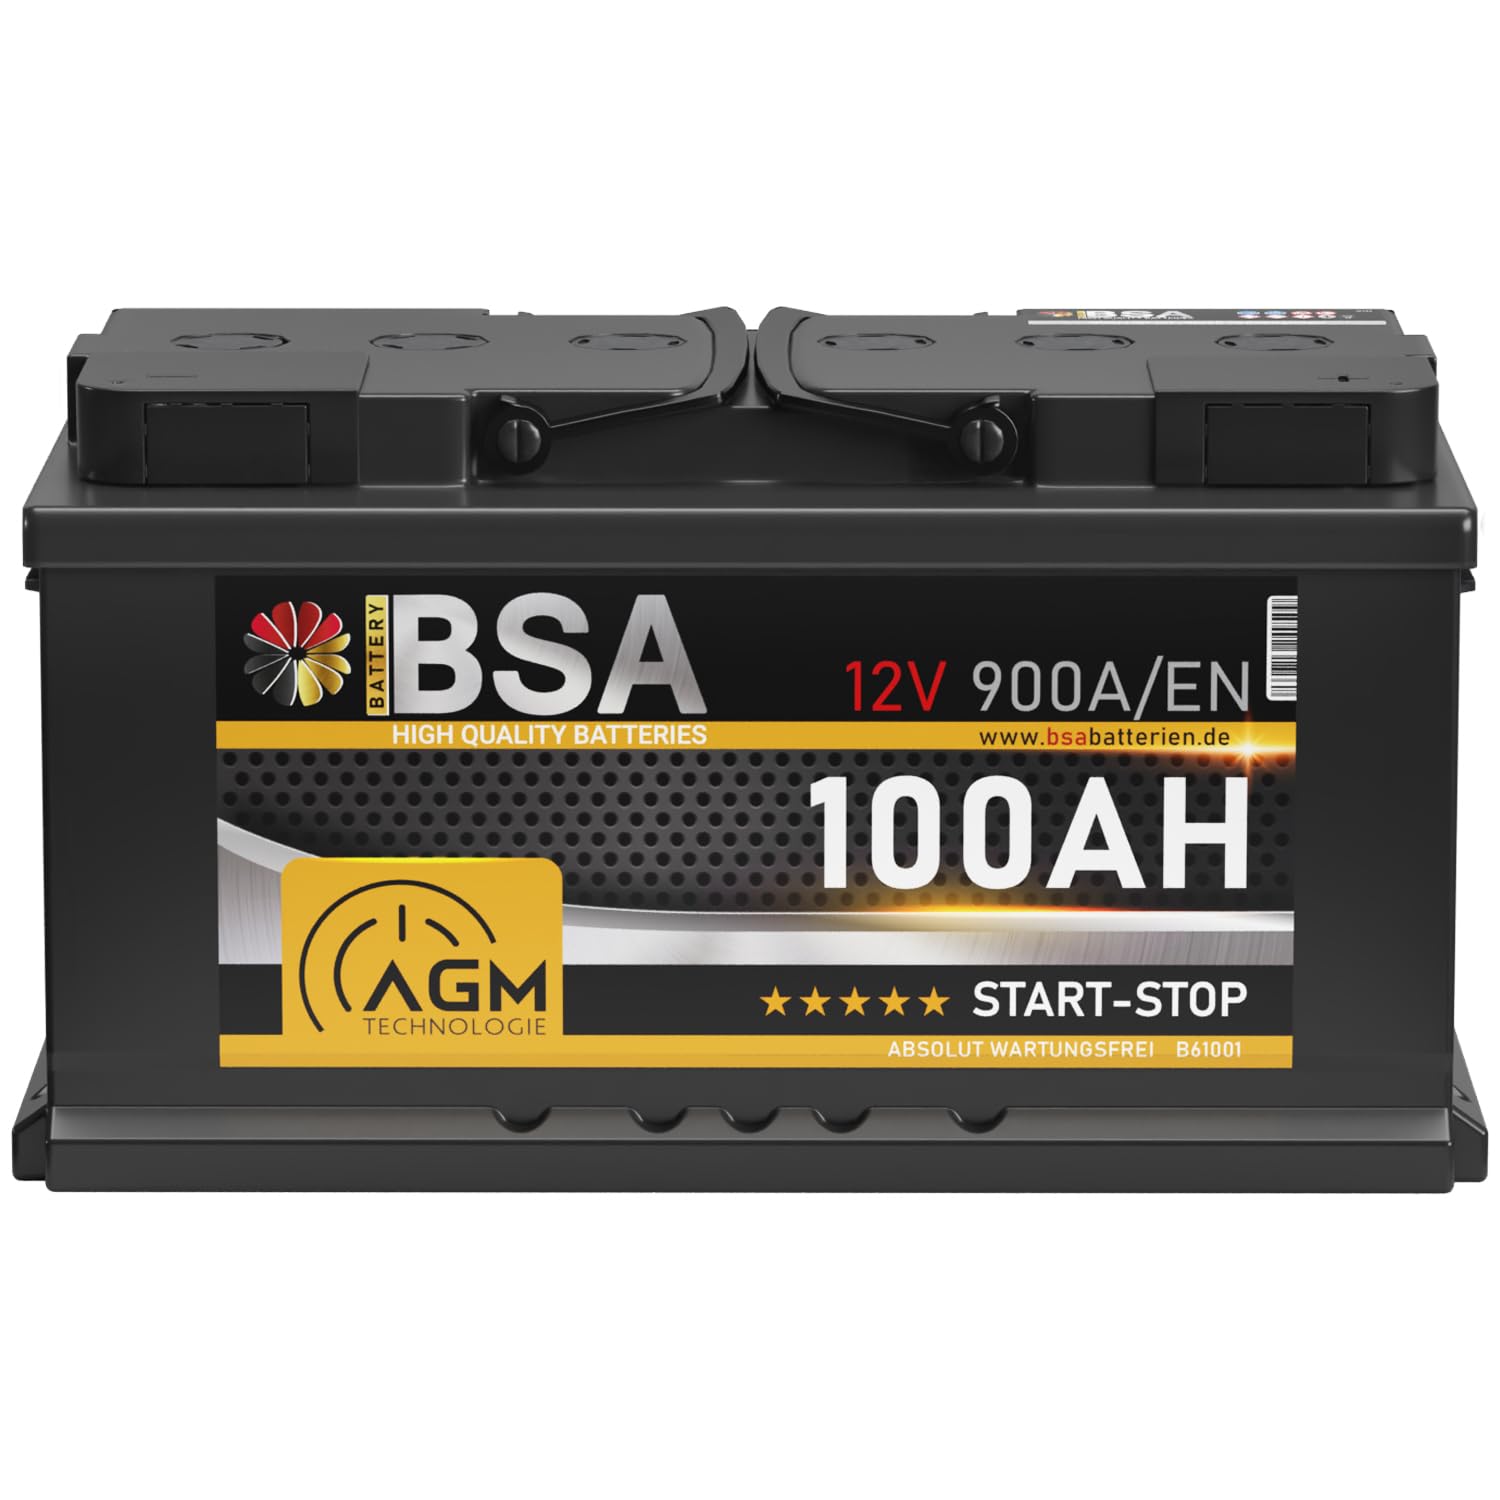 BSA AGM Batterie 100Ah 12V 900A/EN Start-Stop Batterie Autobatterie VRLA statt 95Ah 92Ah 90Ah